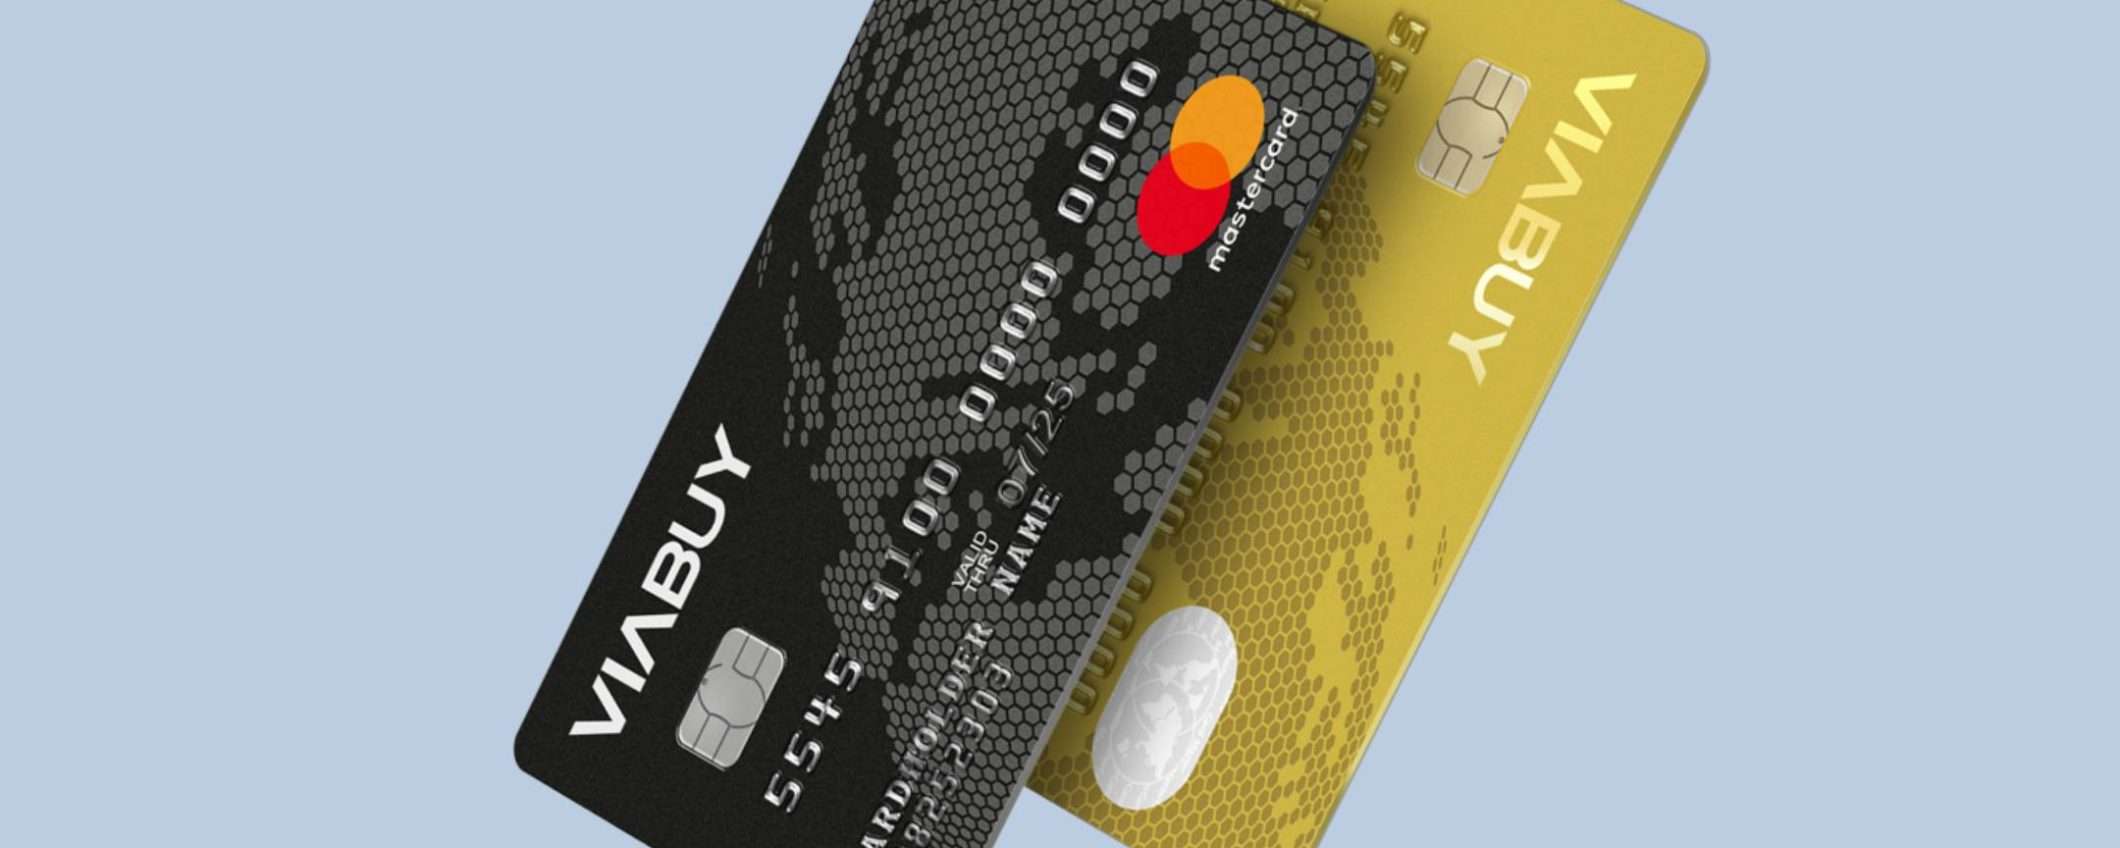 VIABUY: Prepaid Mastercard e IBAN senza banca